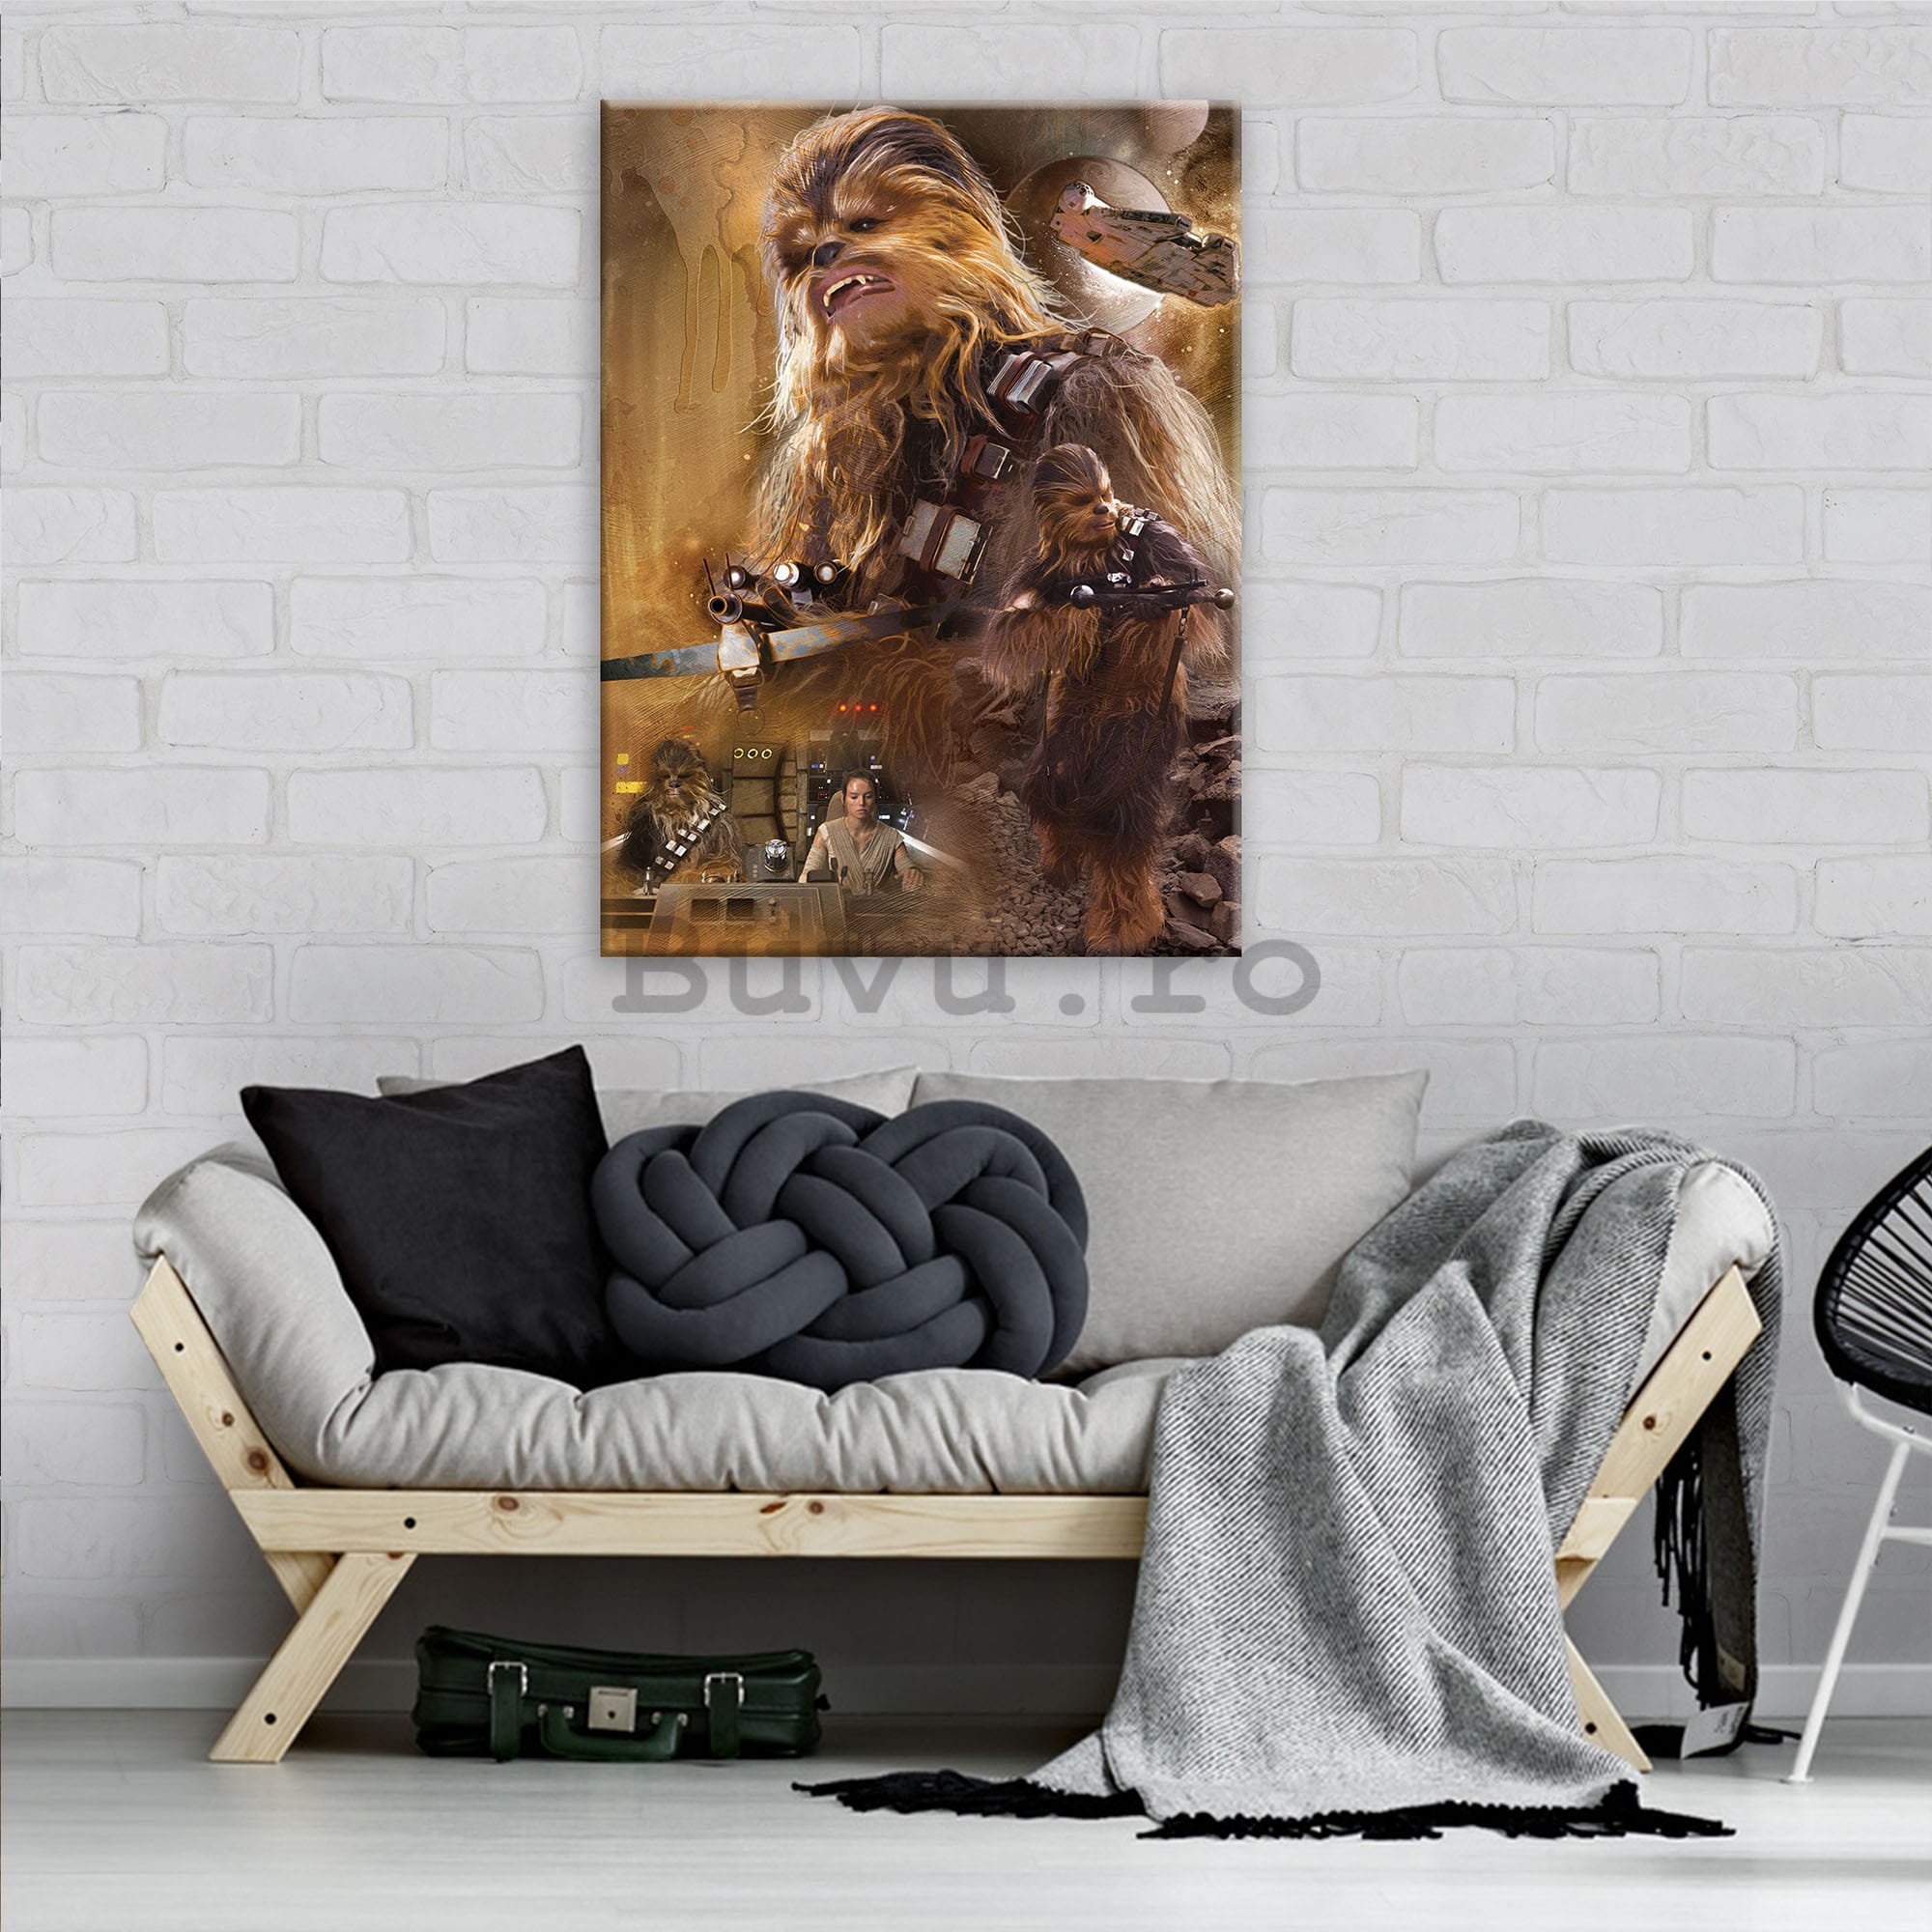 Tablou canvas: Chewbacca - 75x100 cm